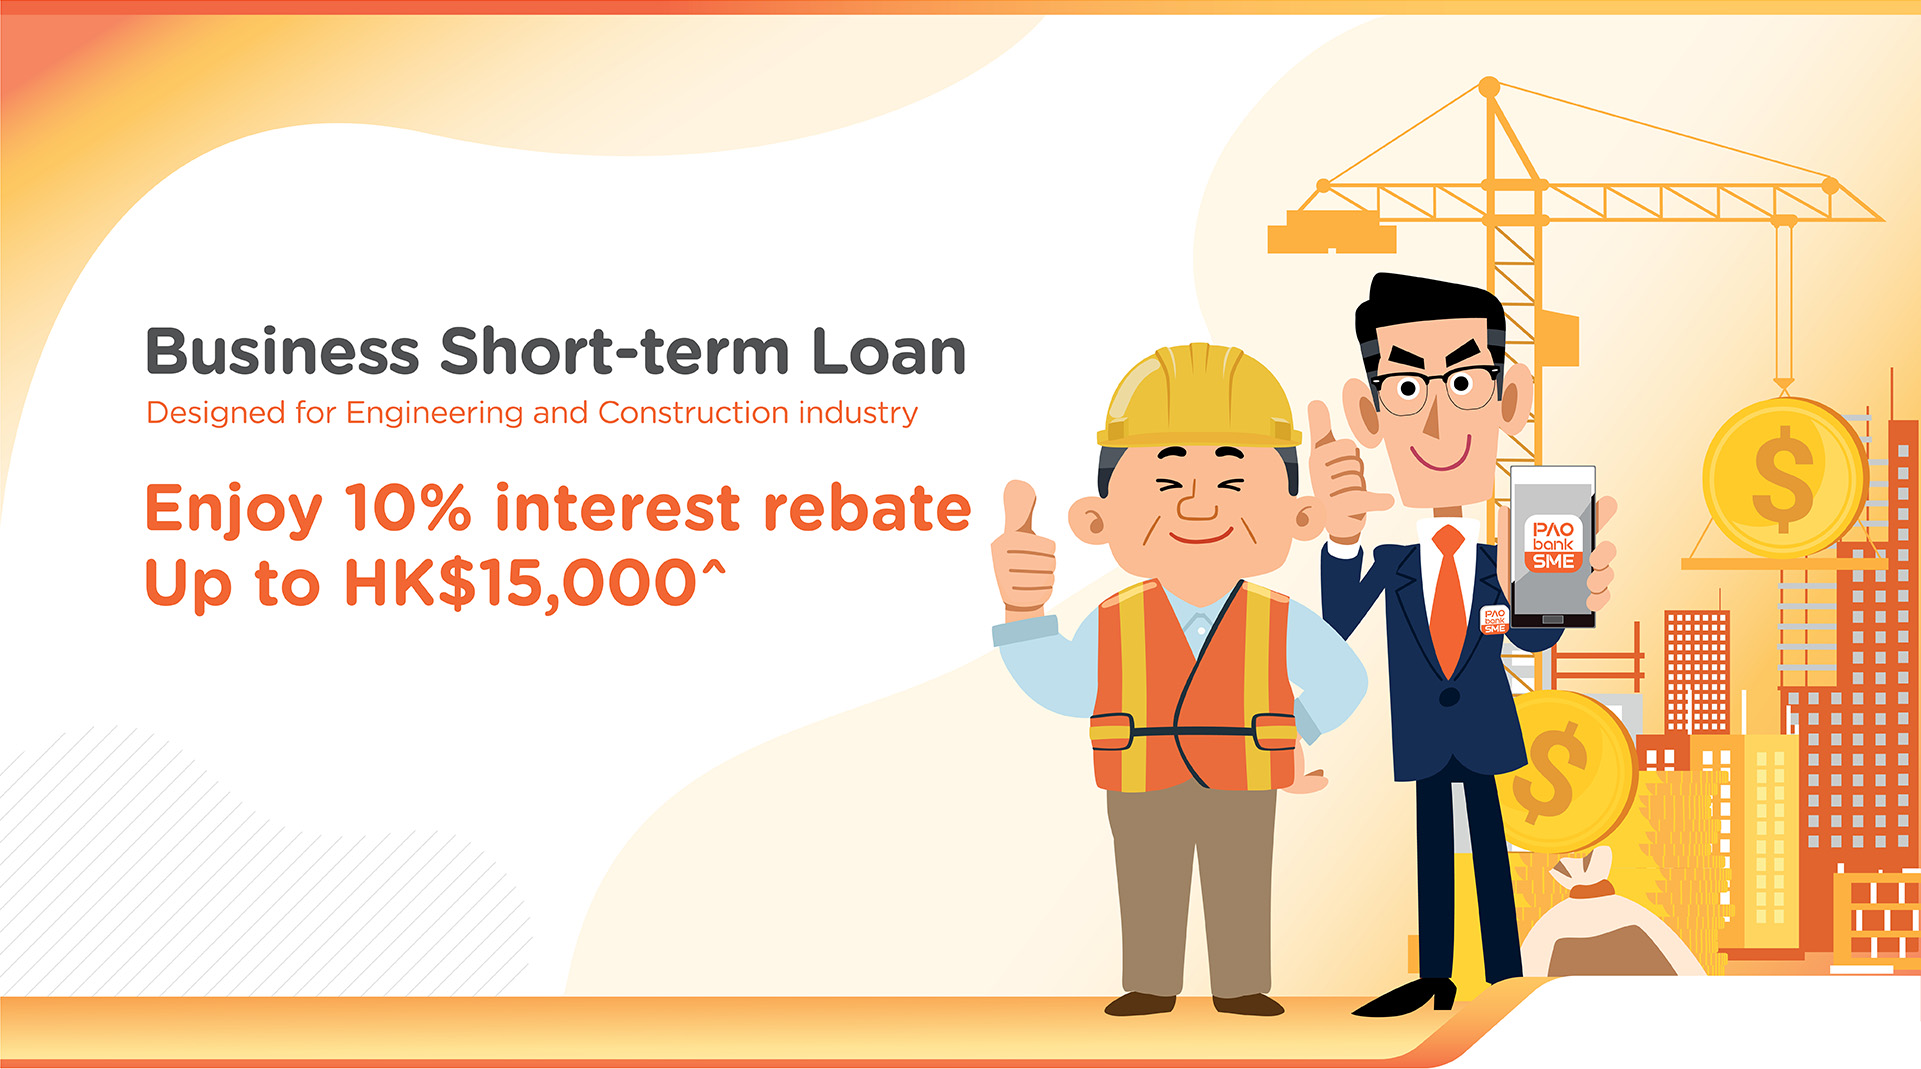 PAOB Business Short-term Loan